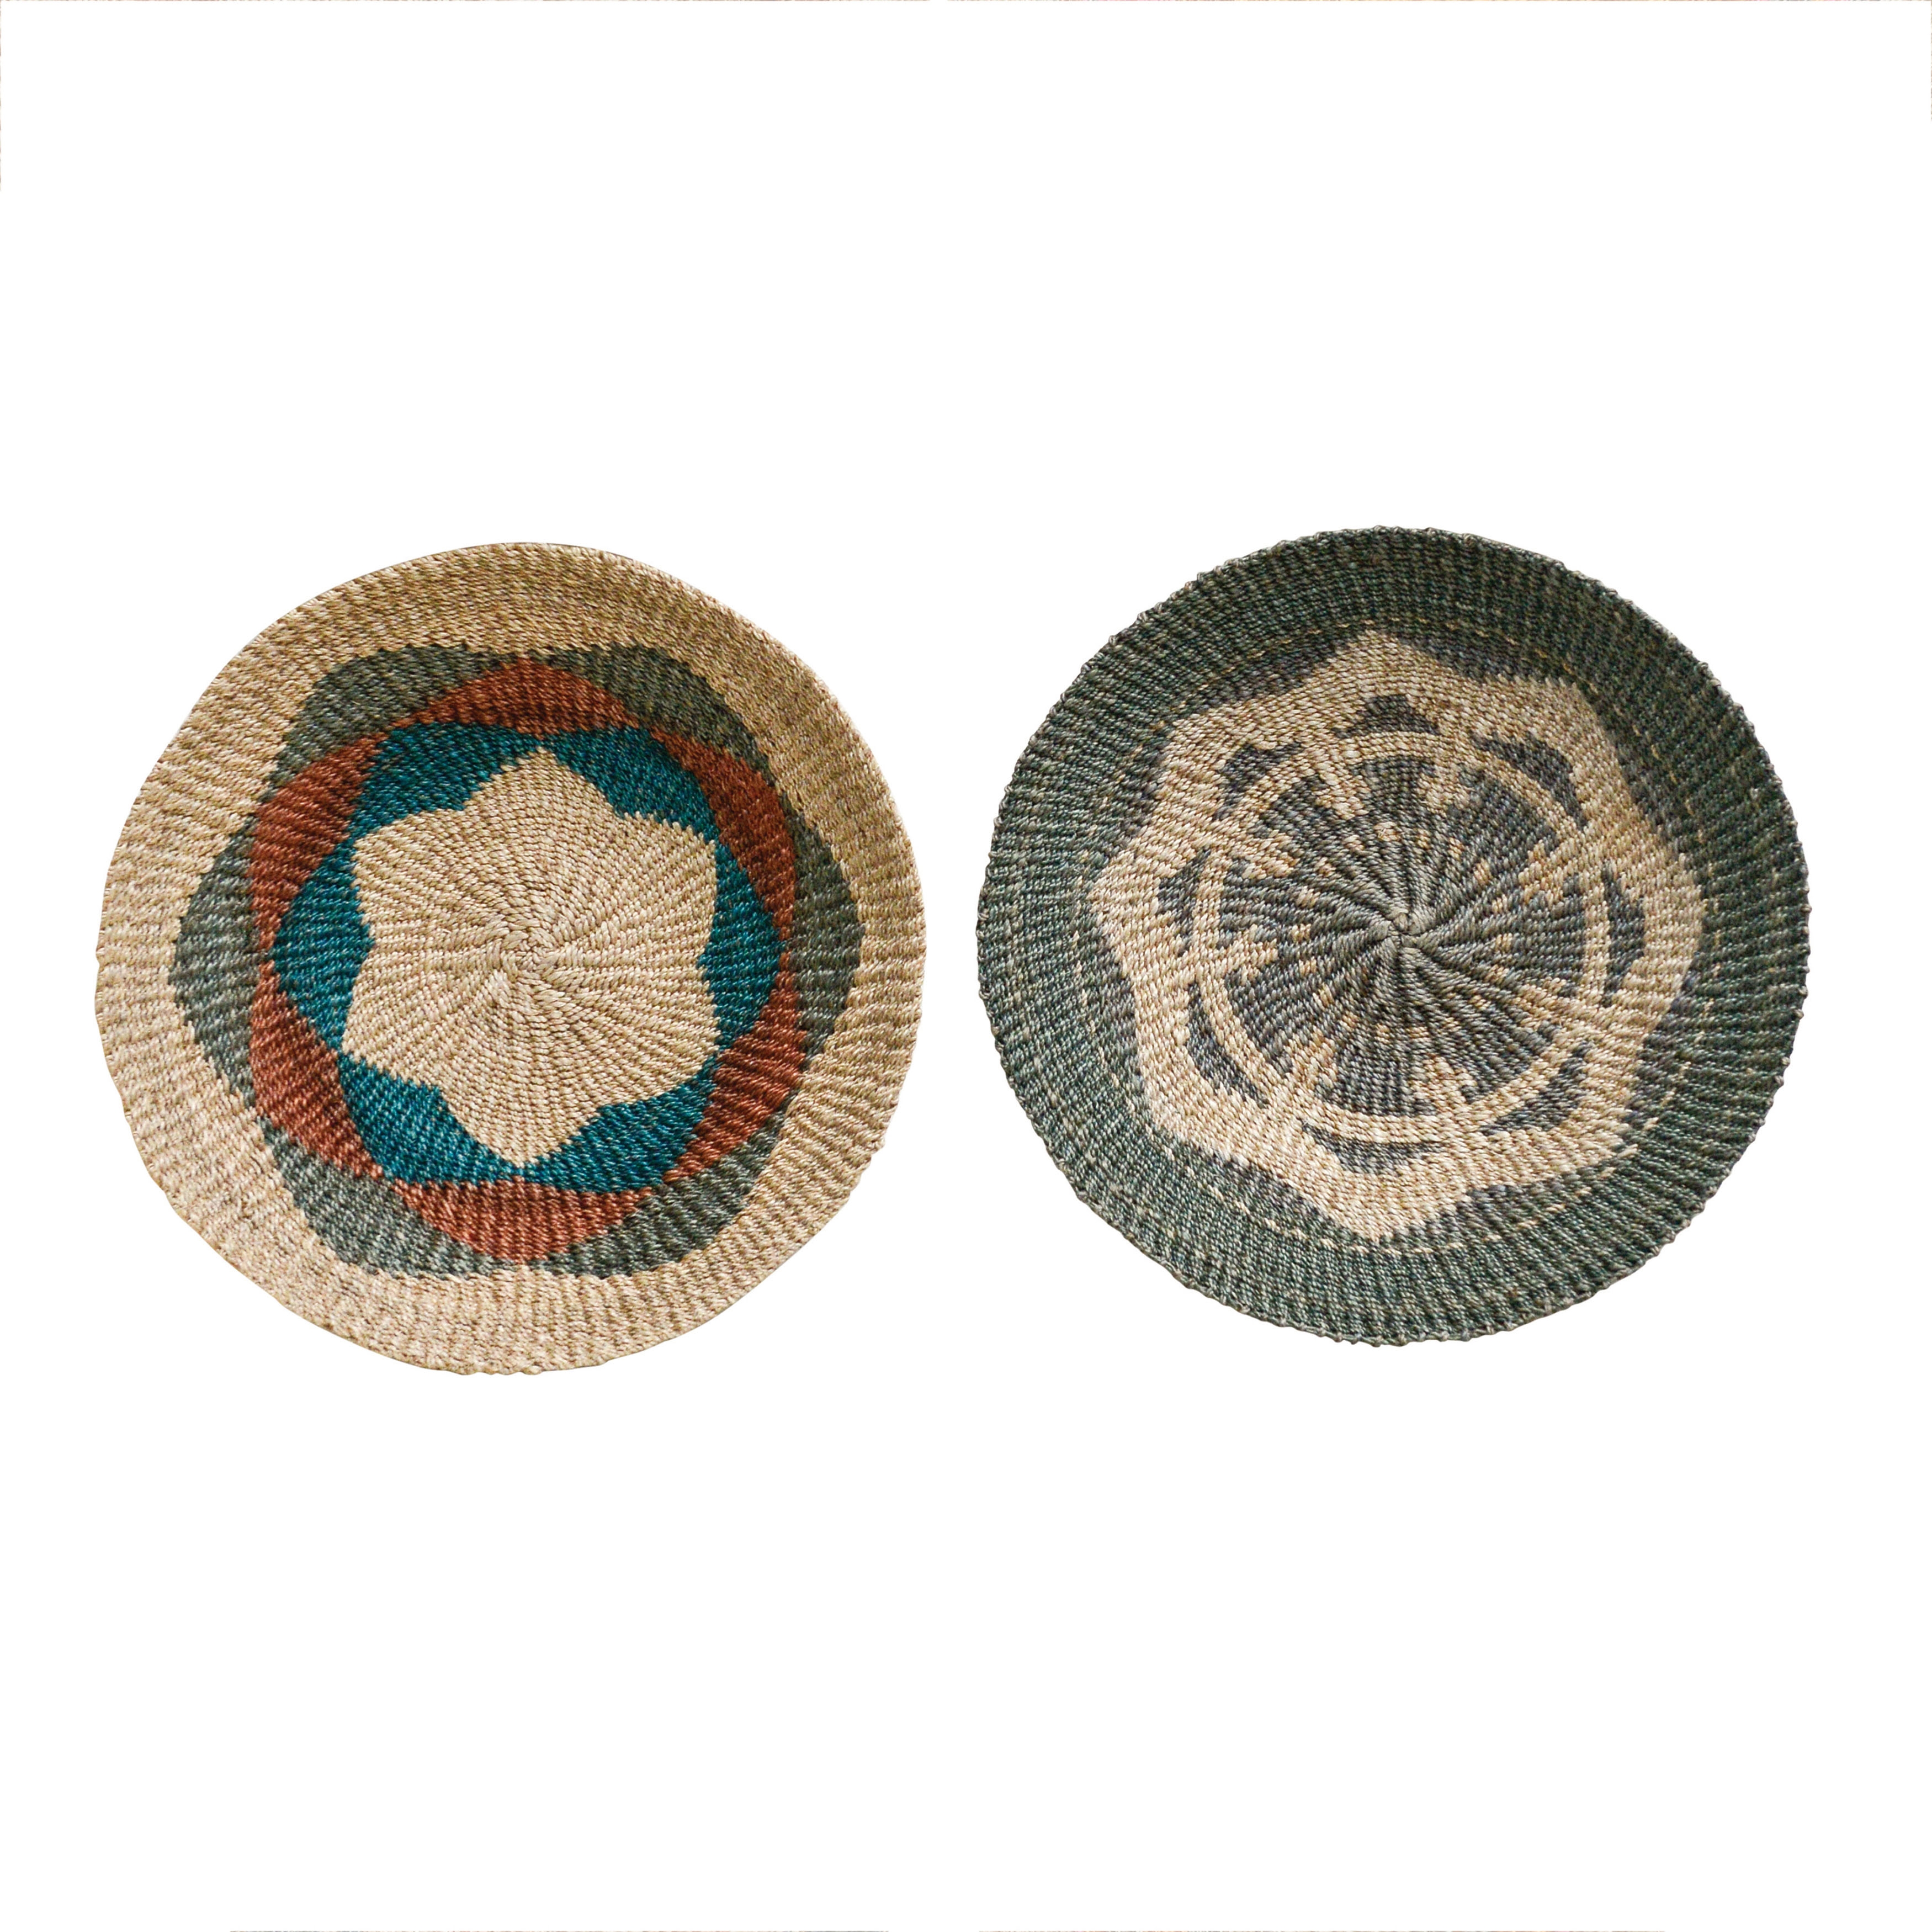 Medium Handwoven Abaca Wall Baskets (Set of 2 Styles) - Image 0